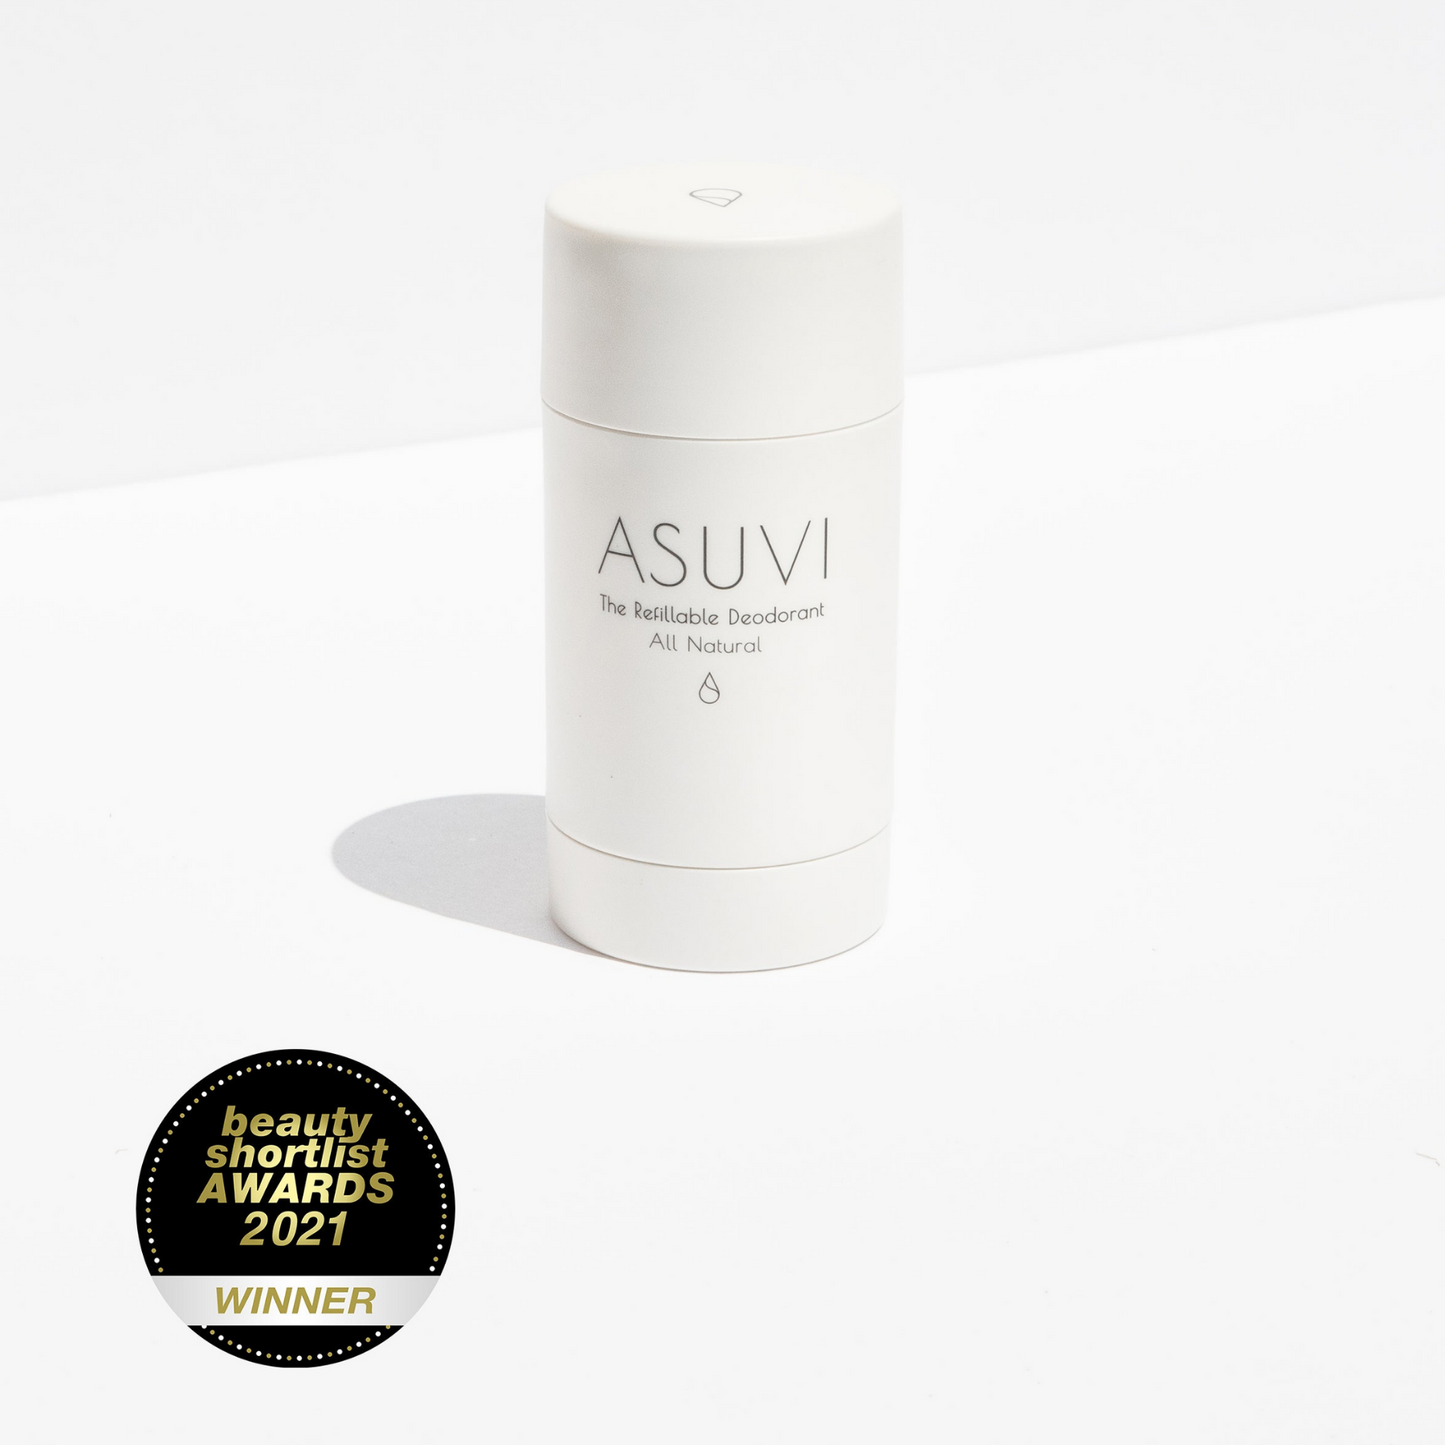 ASUVI Deodorant Aqua + Earth 65g, Reusable Tube Or Refill